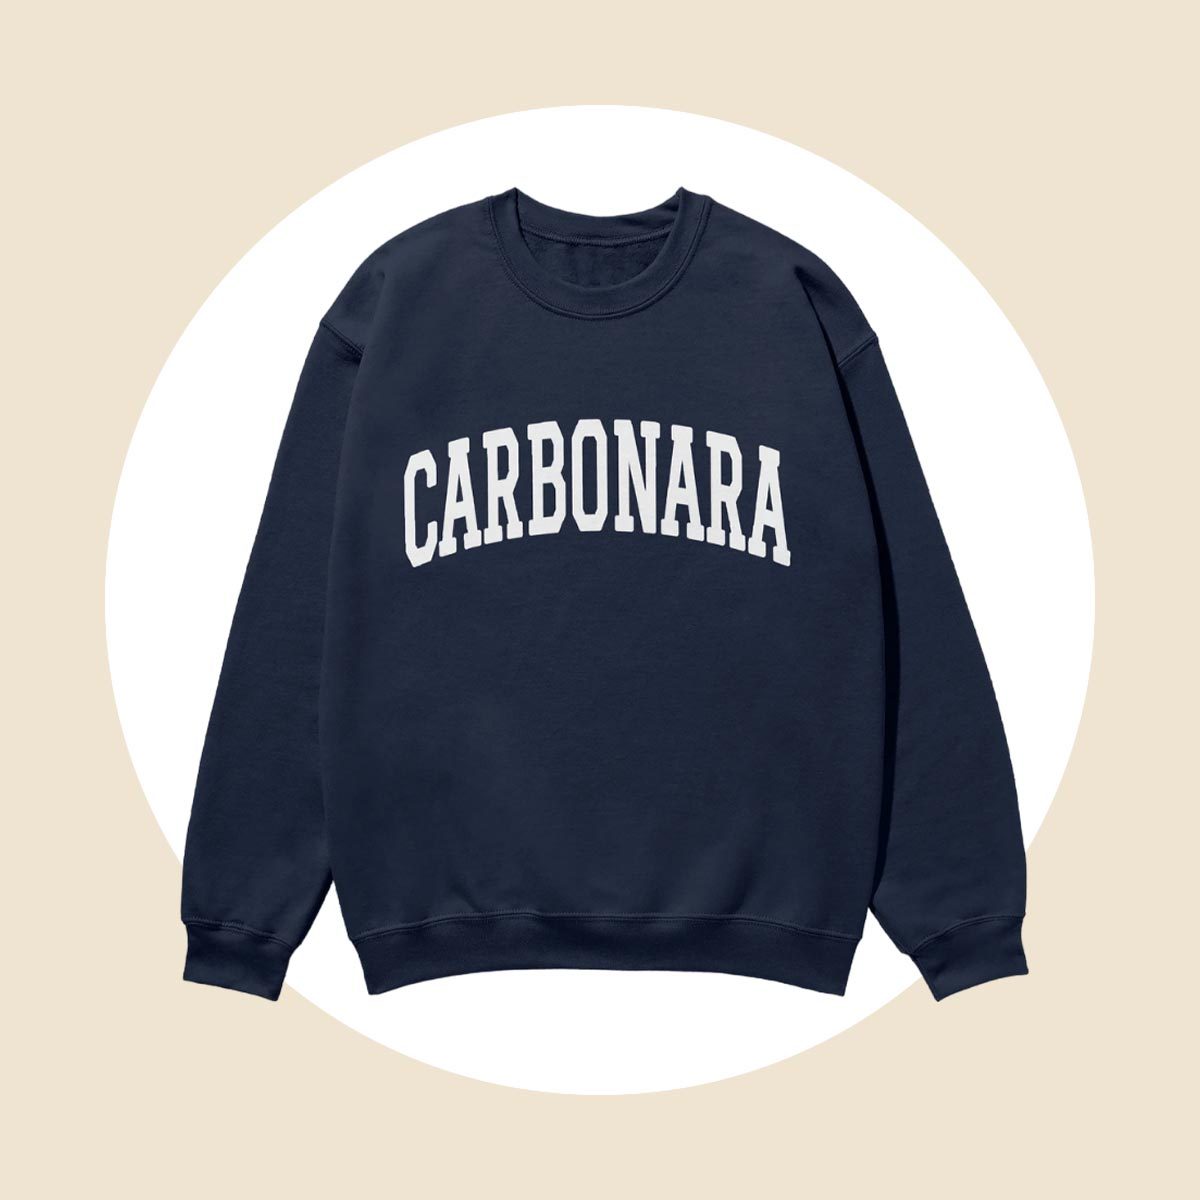 Carbonara Sweatshirt